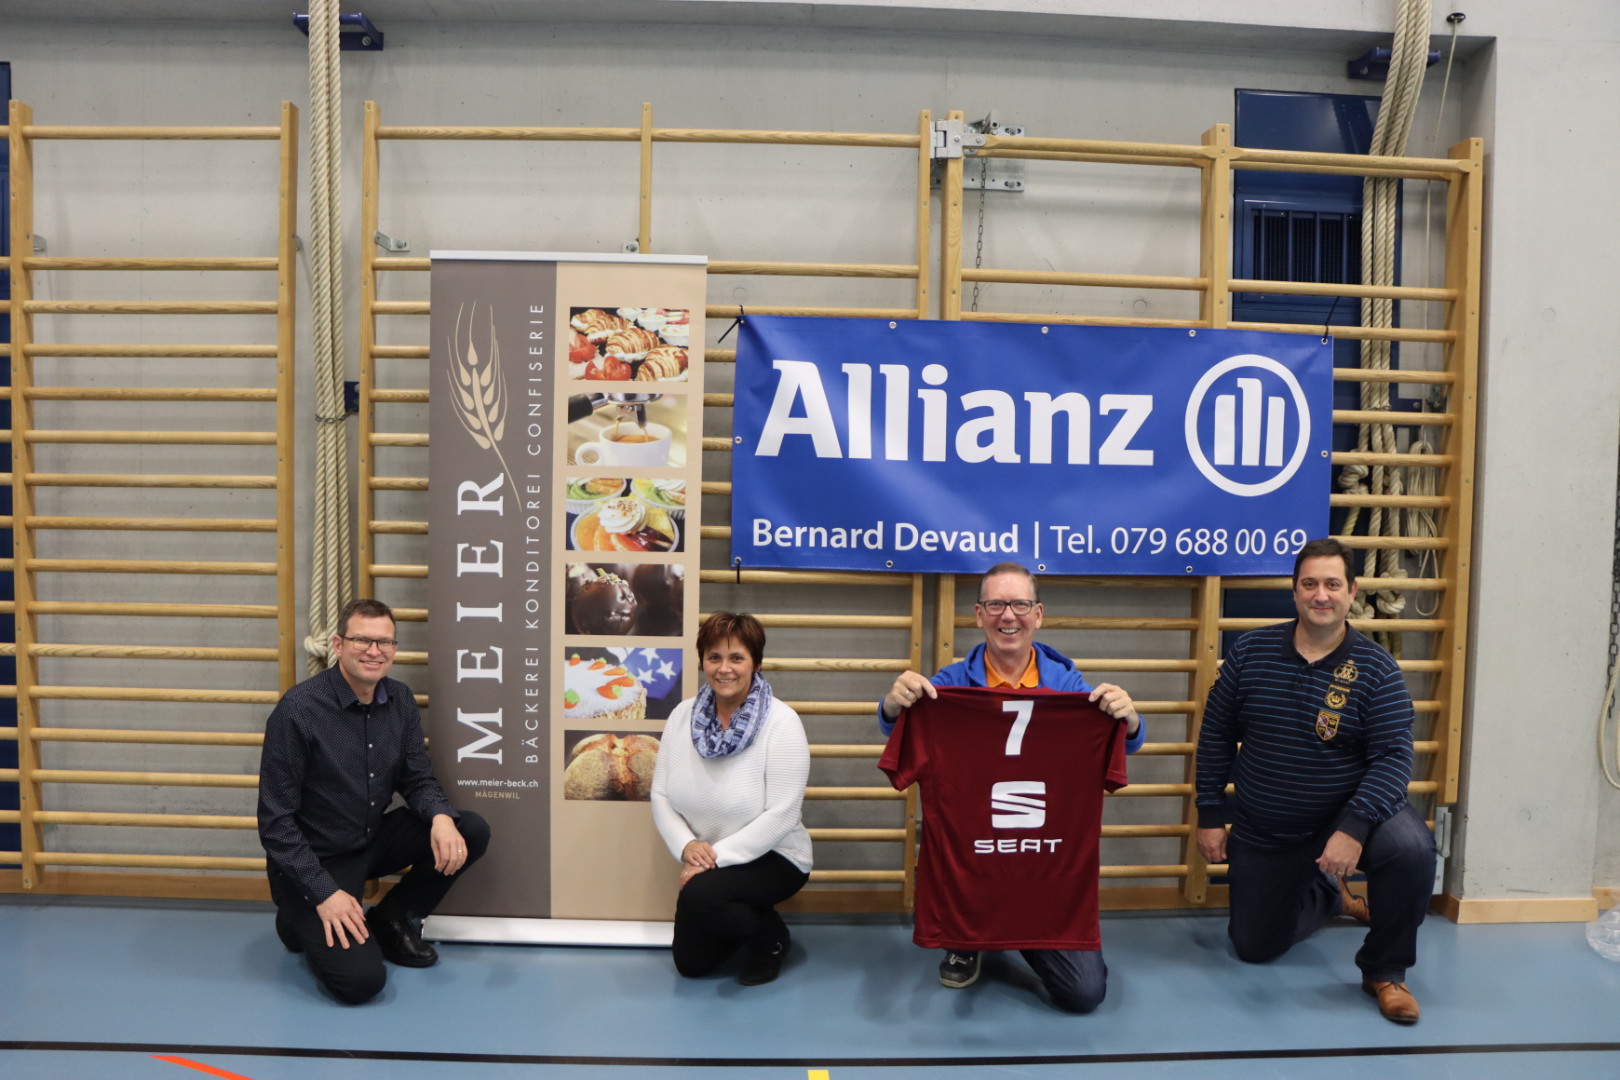 Dank an unseren Sponsoren Meier Bäckerei, Allianz und Seat